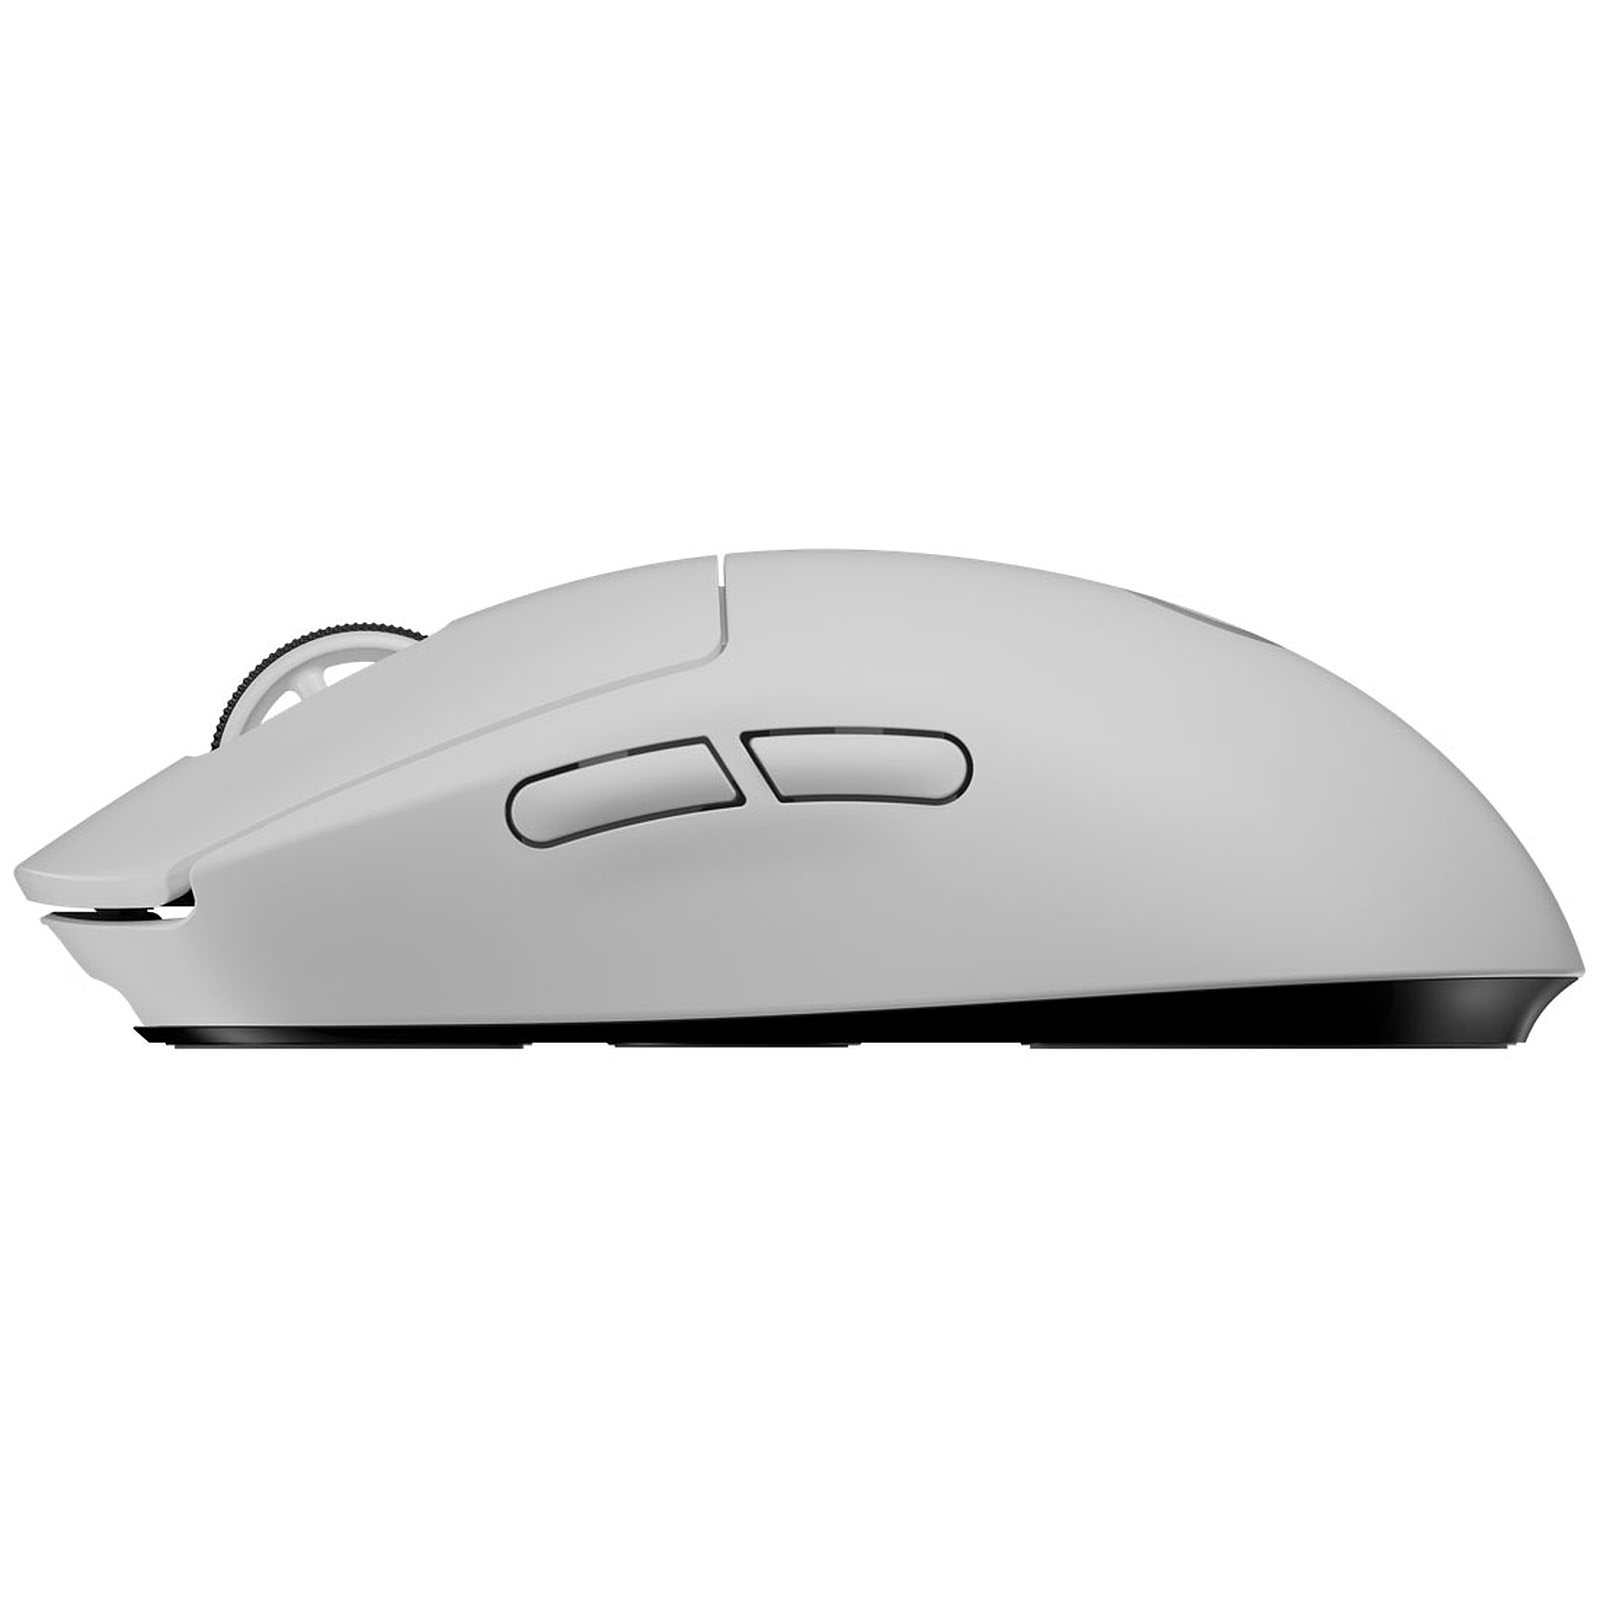 Logitech PRO X SUPERLIGHT Wireless Gaming Mouse White - Souris PC